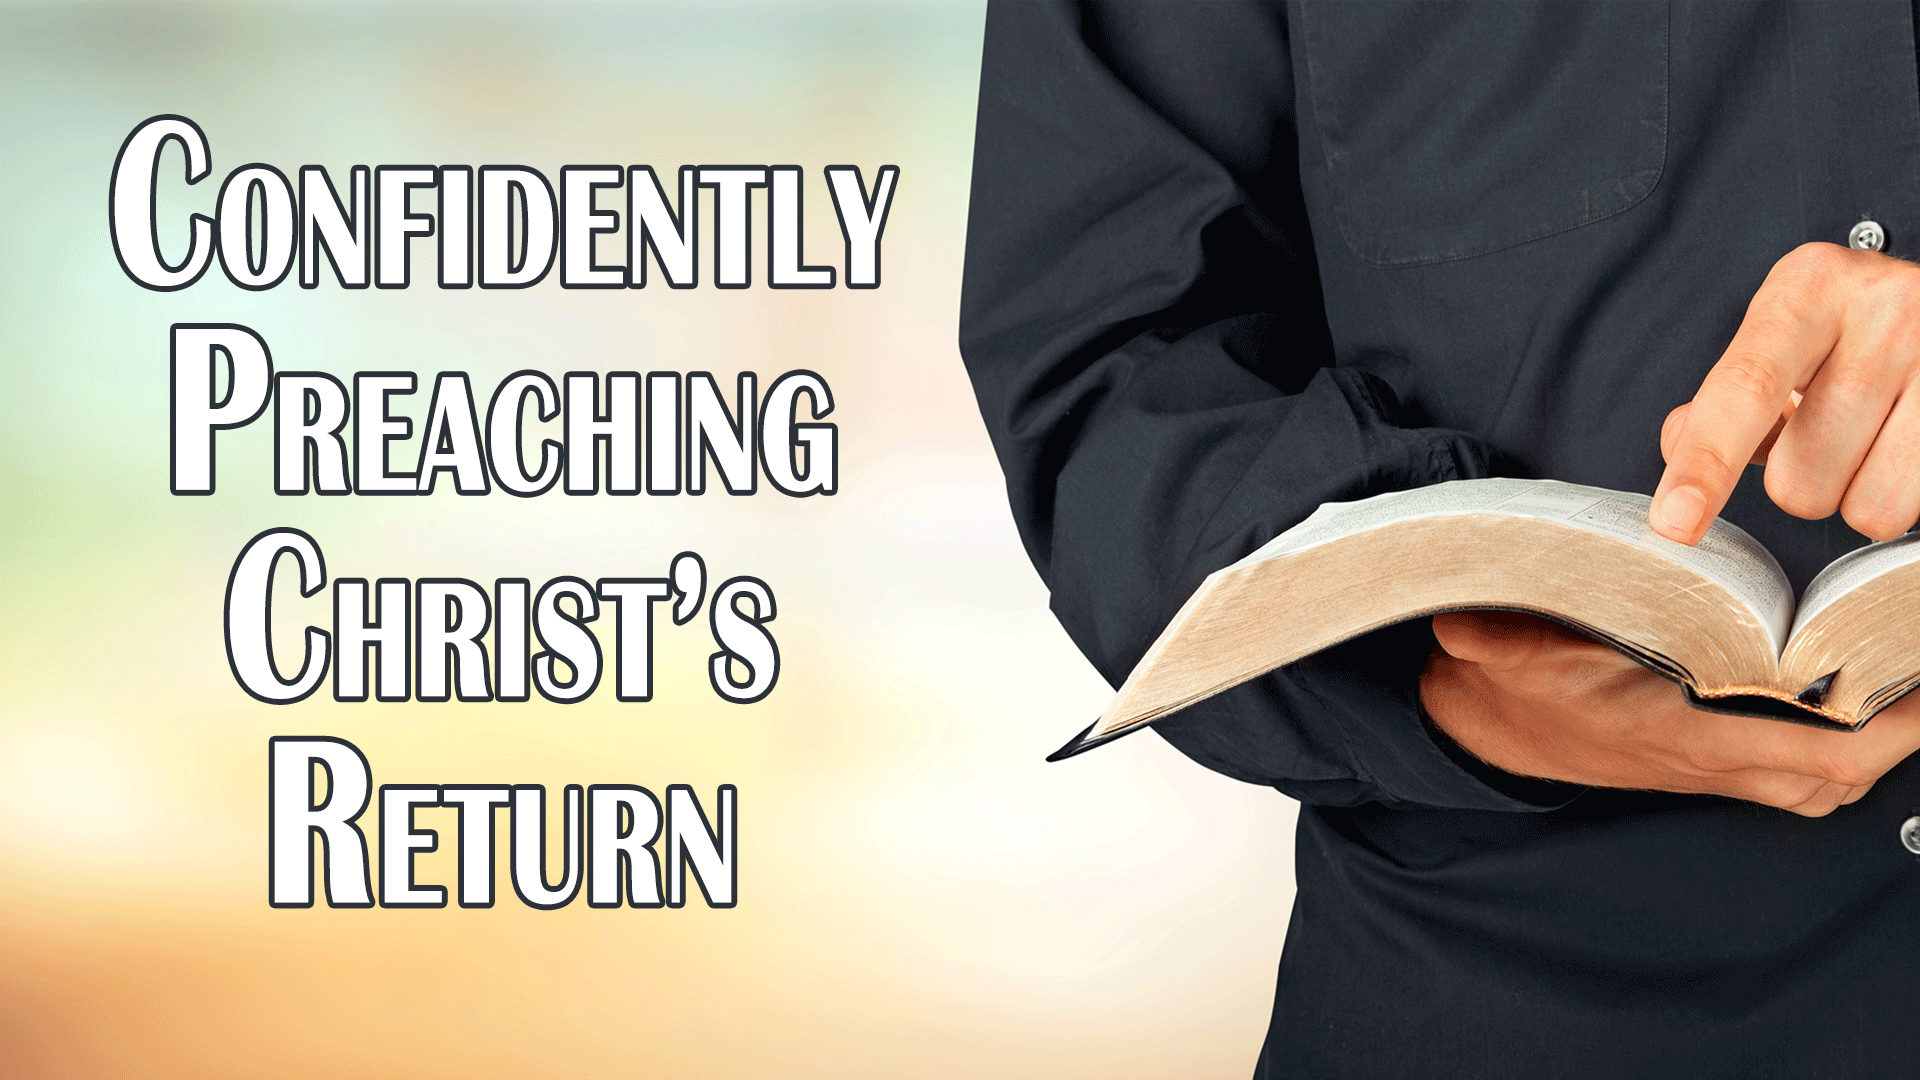 Confidently Preaching Christ’s Return - Thumb